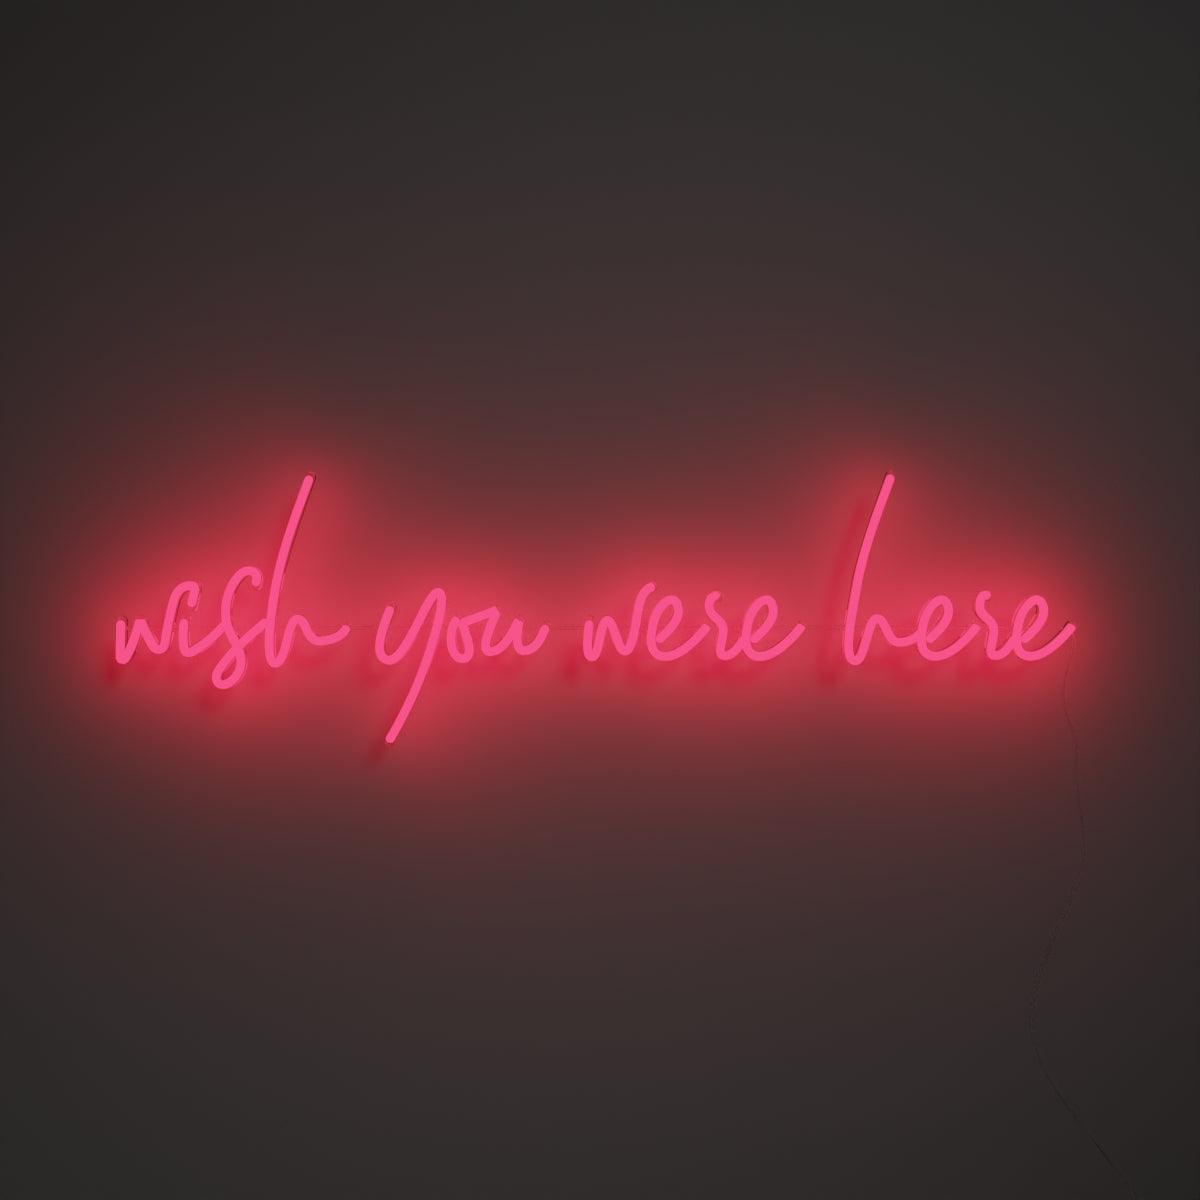 Wish you were here - Neon Tabela - Neonbir